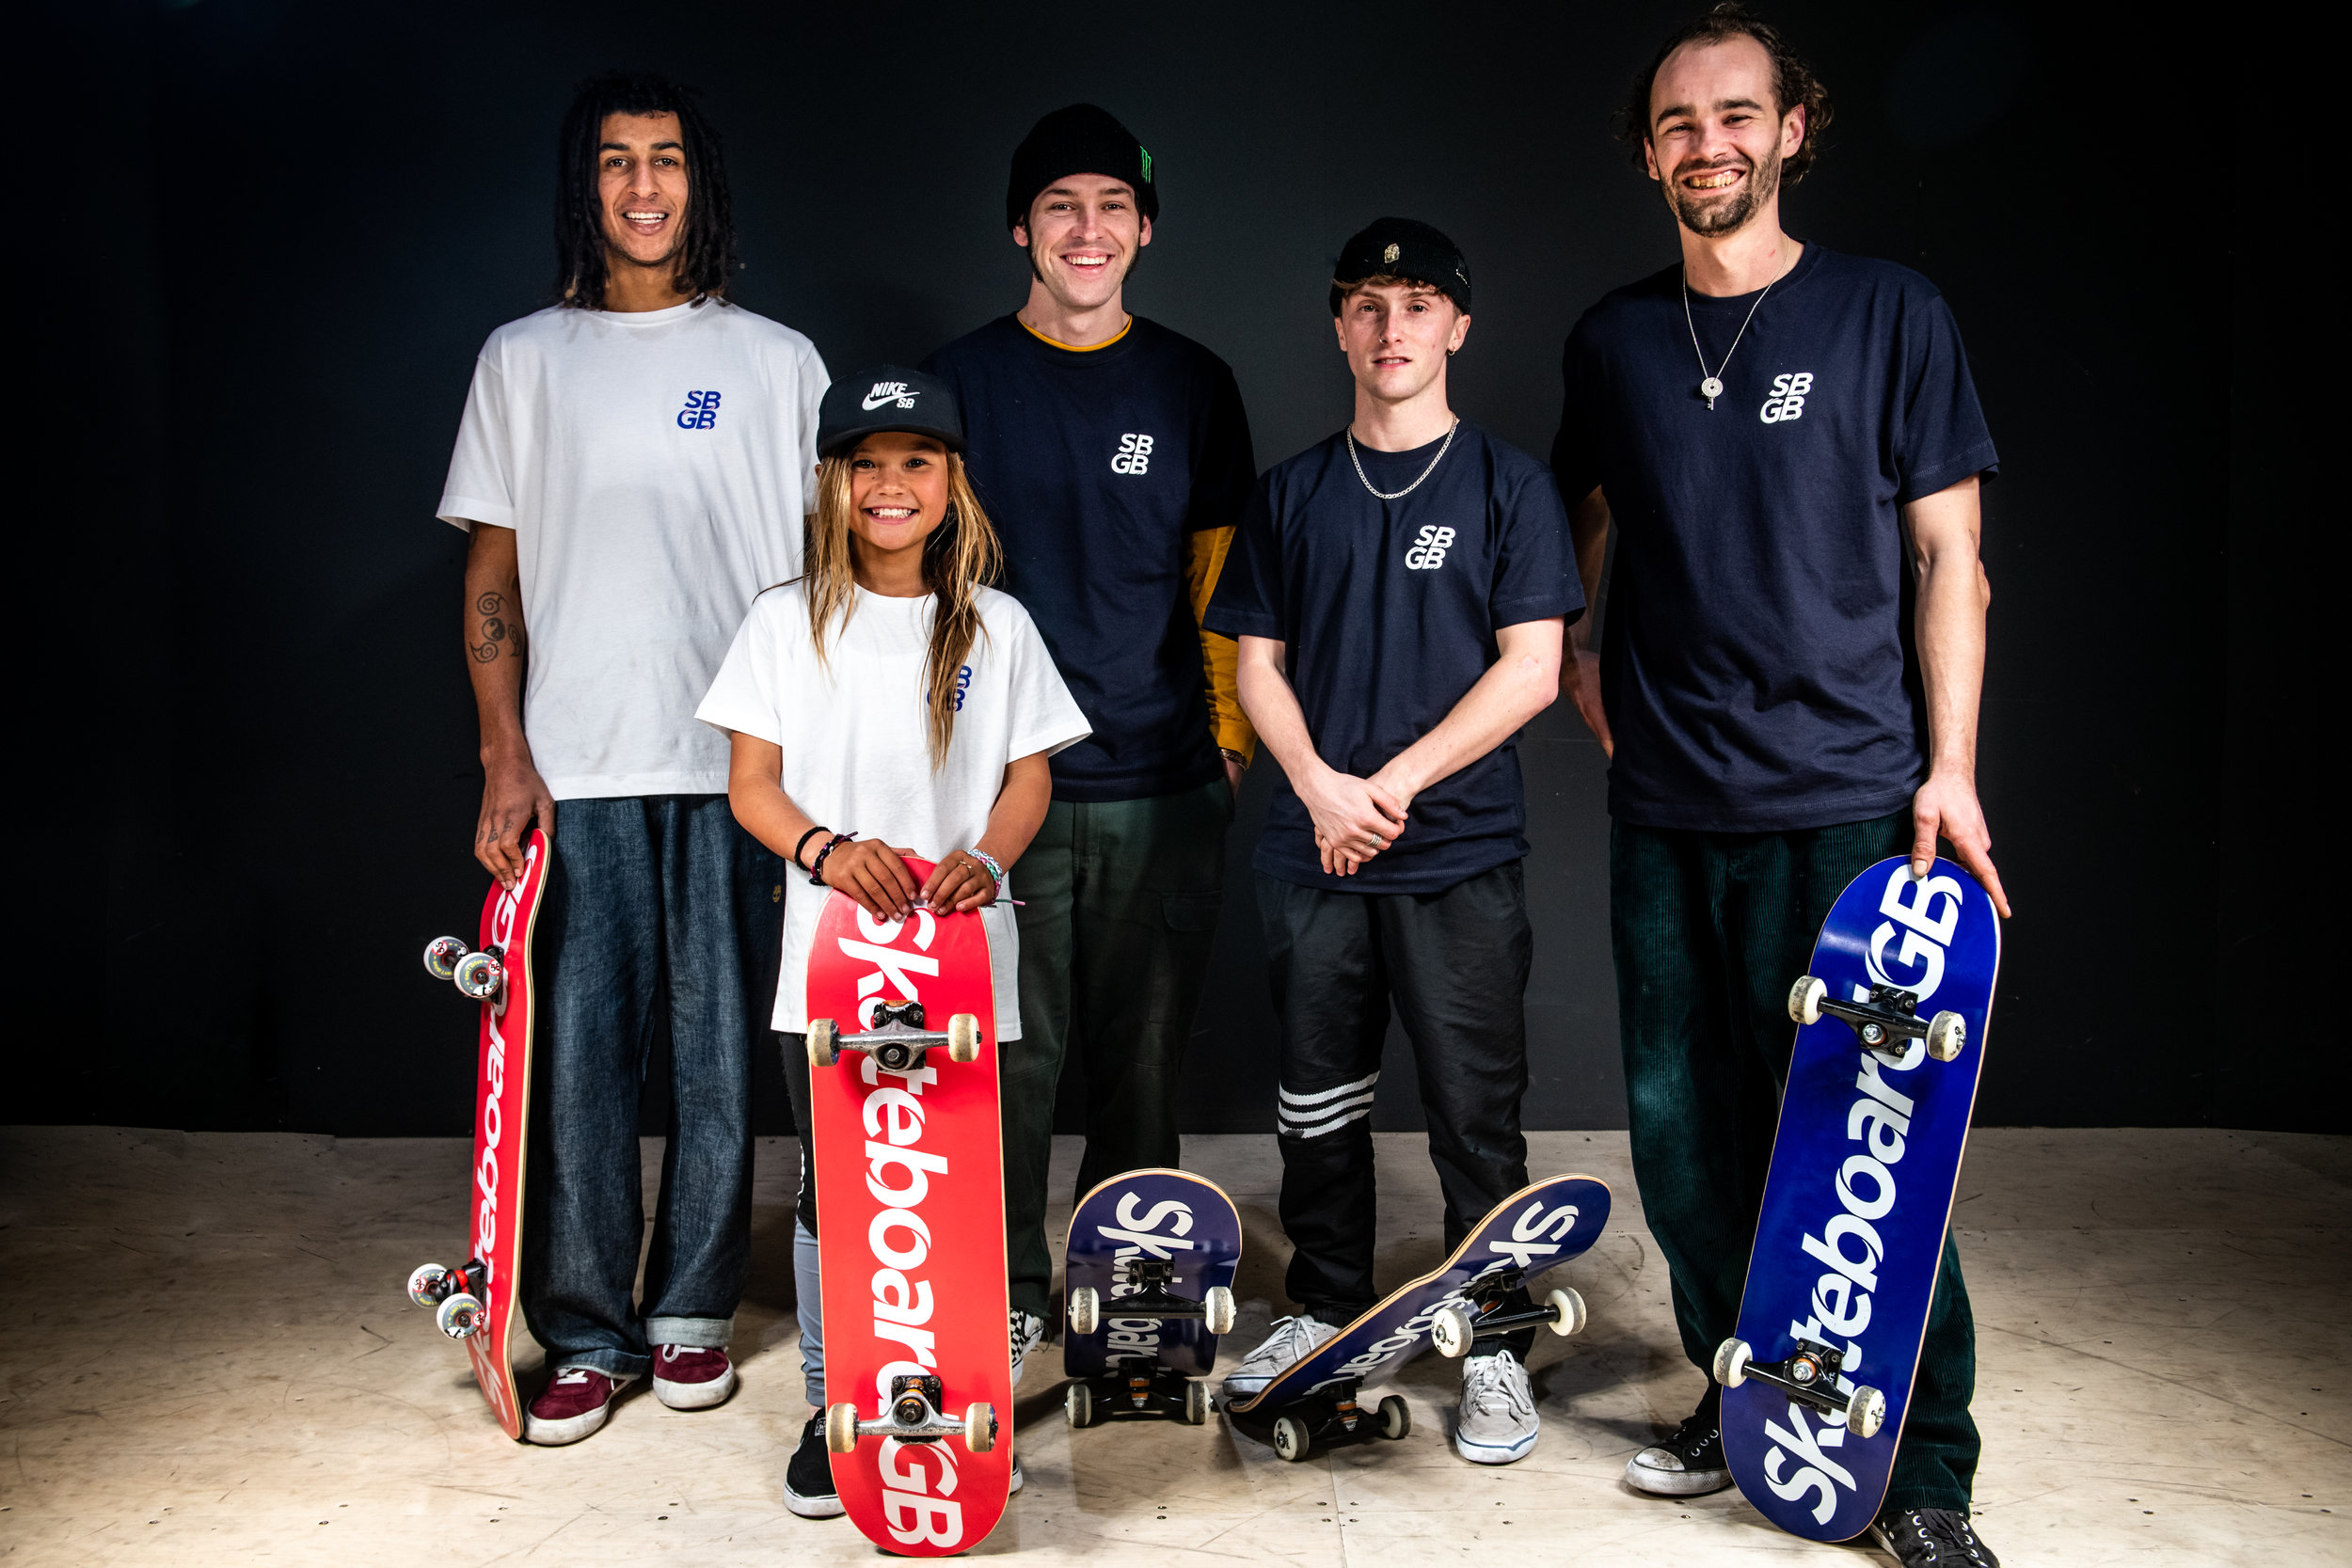 Skateboard GB announces Aspiration Fund skateboarders targeting 2020 Skateboard GB